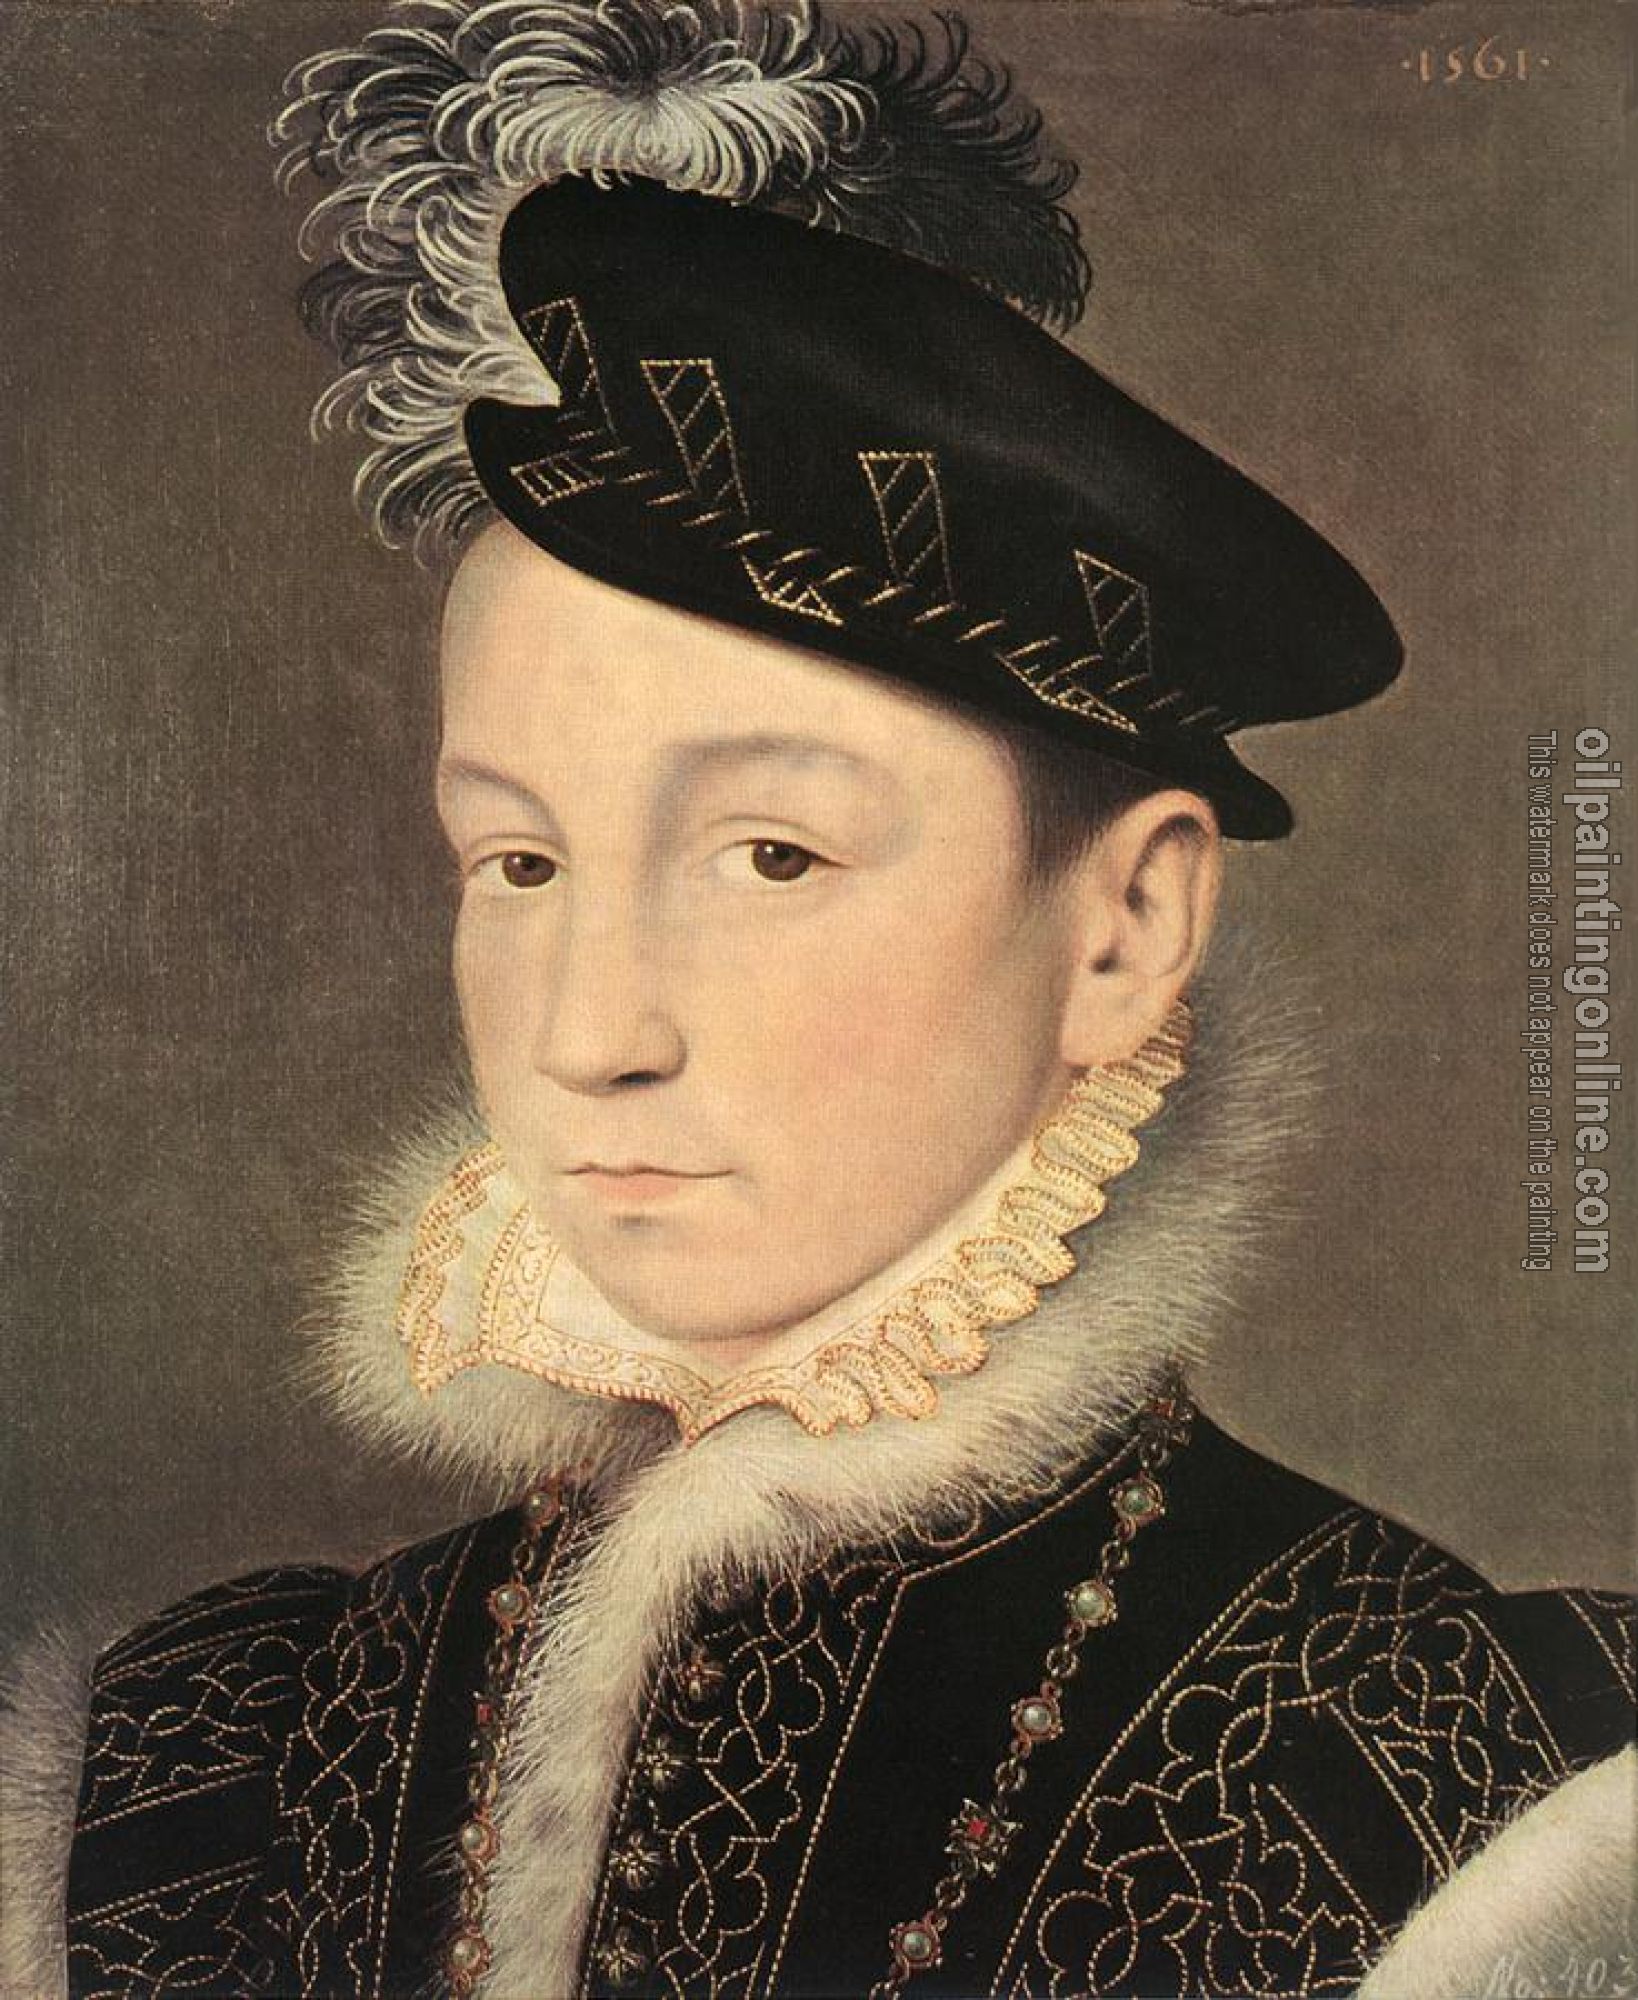 Francois Clouet - Portrait of King Charles IX of France